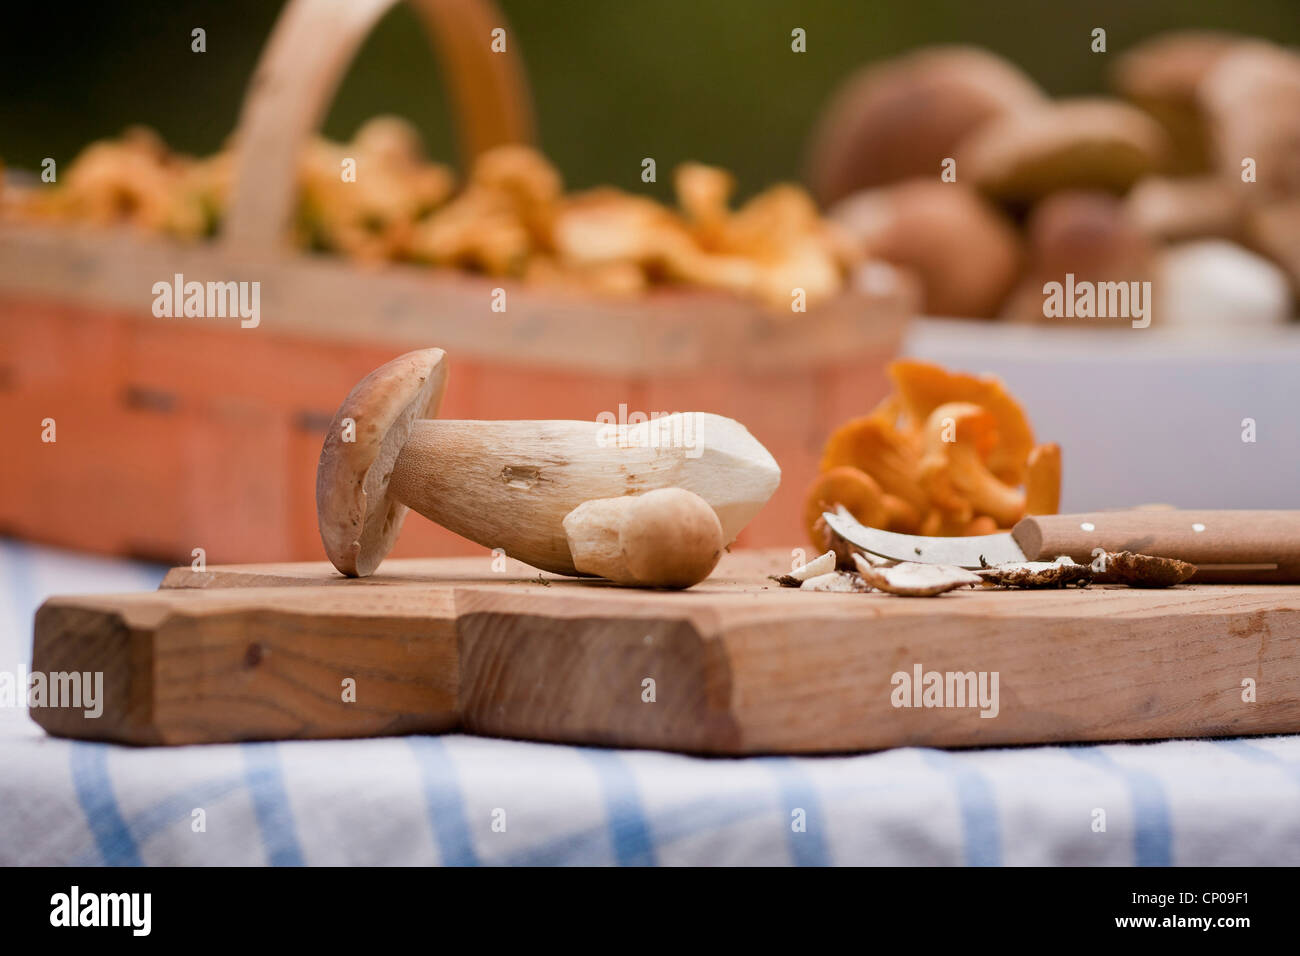 penny buns and chanterelles on a chopping board, Germany, Rhineland-Palatinate Stock Photo